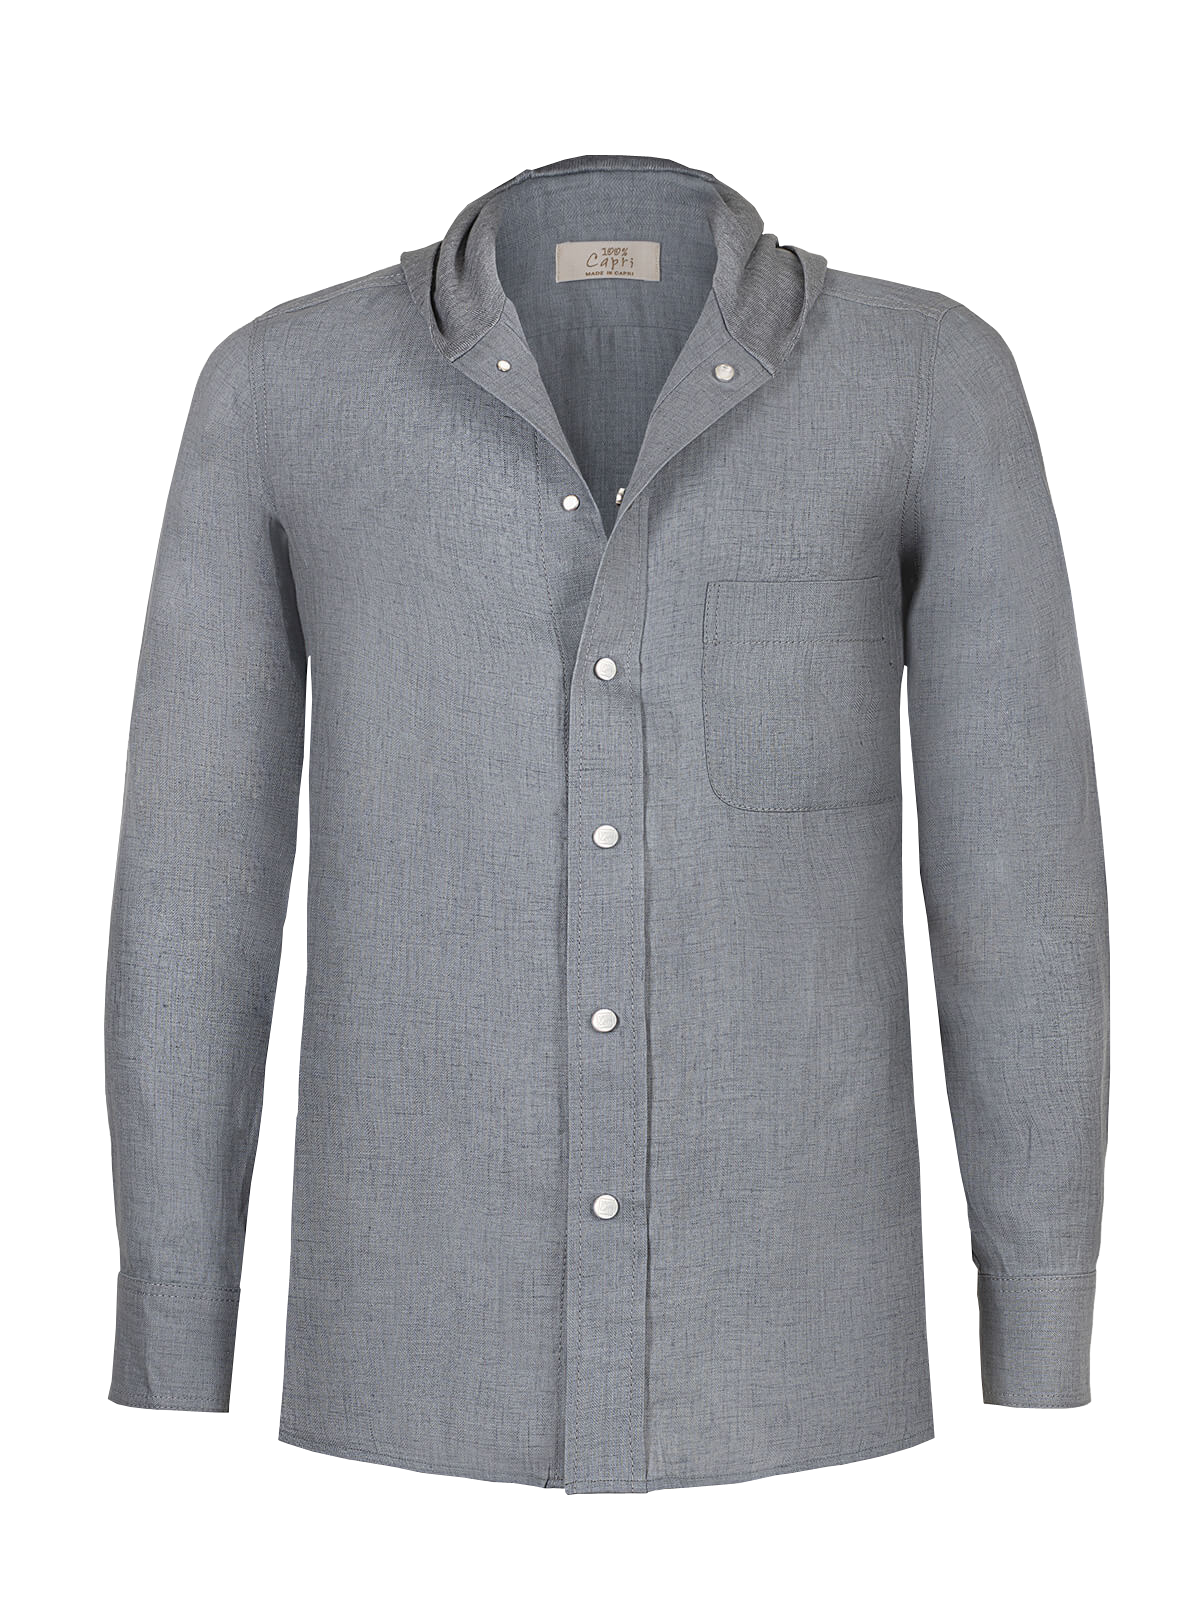 Camicia Cappuccio 100% Capri dark grey linen t-shirt front